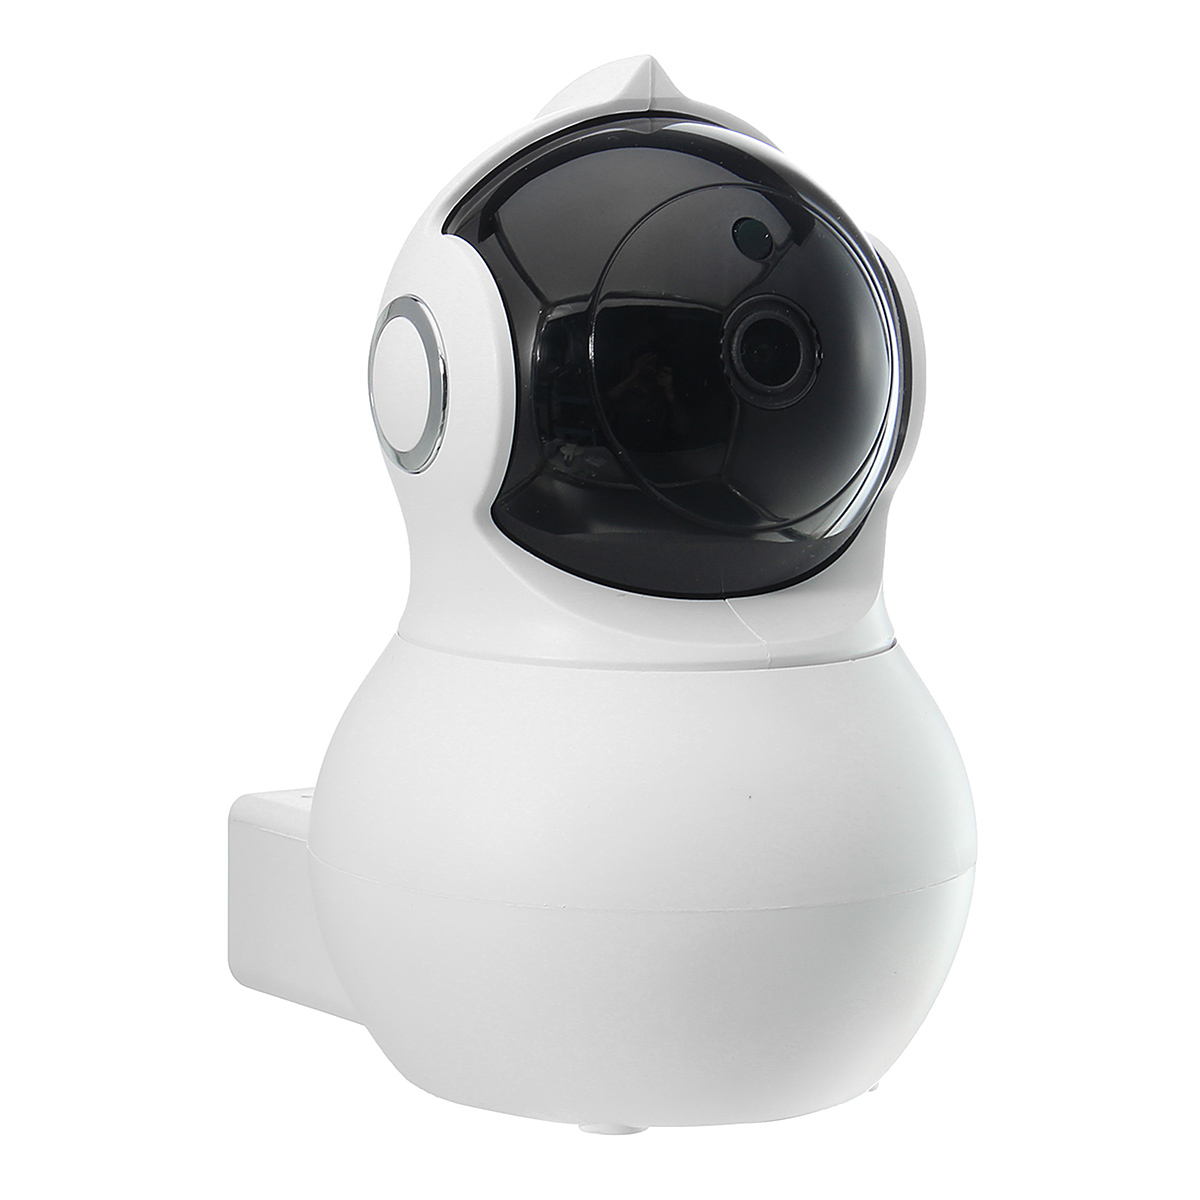 Q8 Home Security 1080P HD IP Camrea Wireless Smart WI-FI Audio CCTV Camera Webcam 22